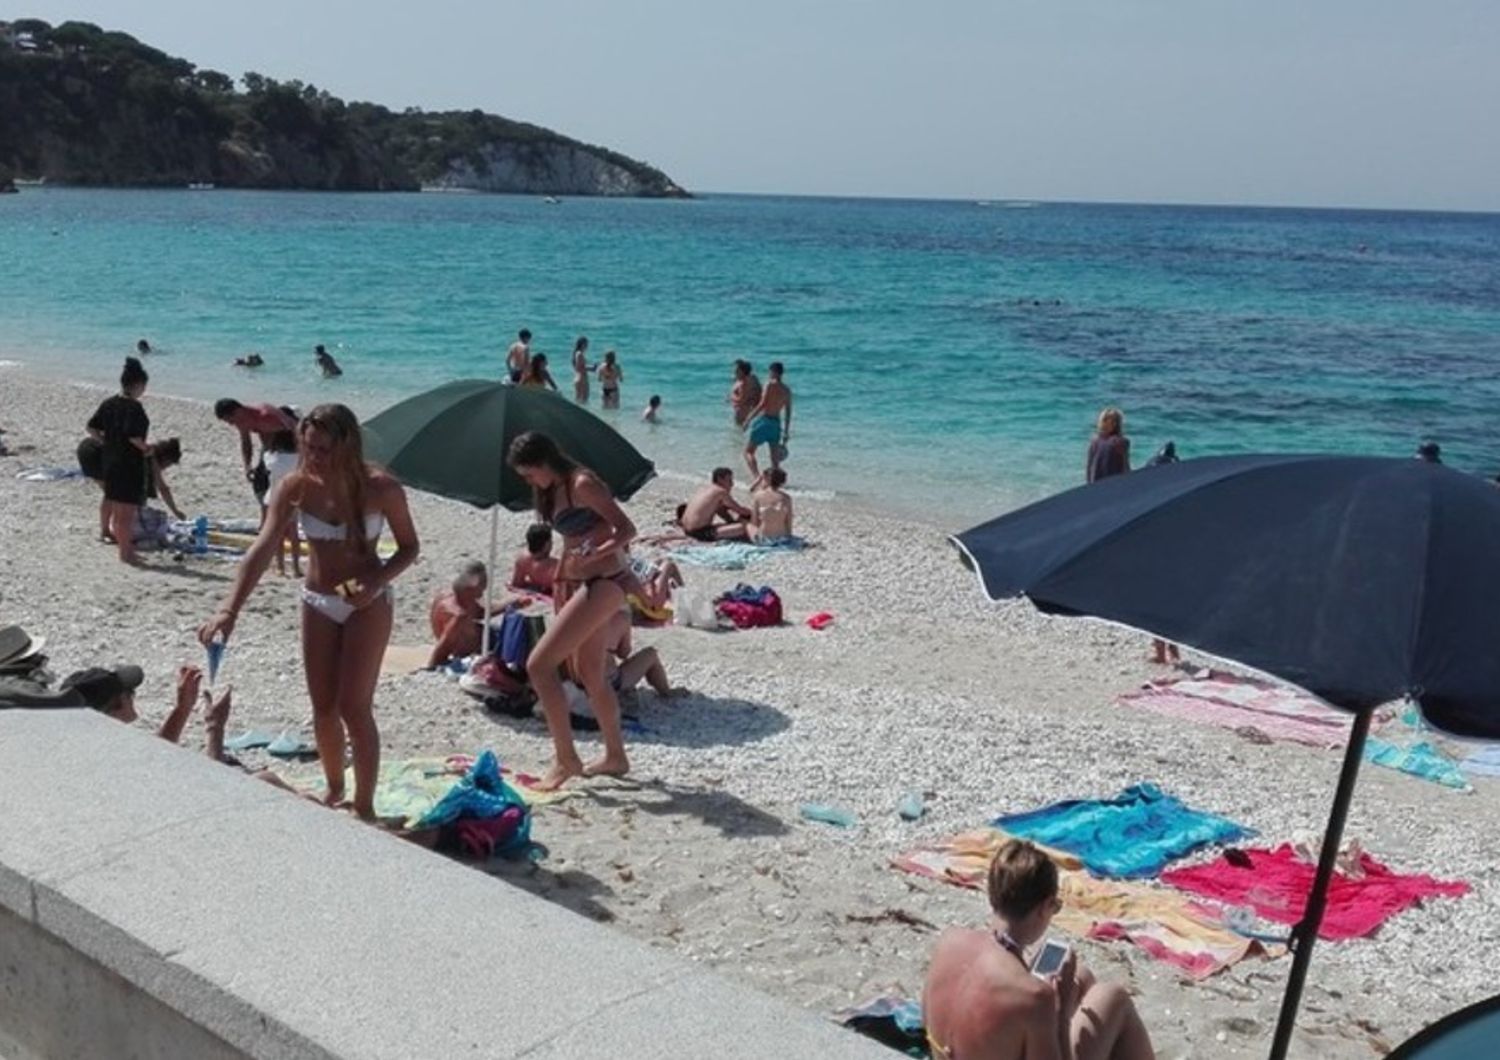 &nbsp;Estate vacanze mare spiaggia - youreporter